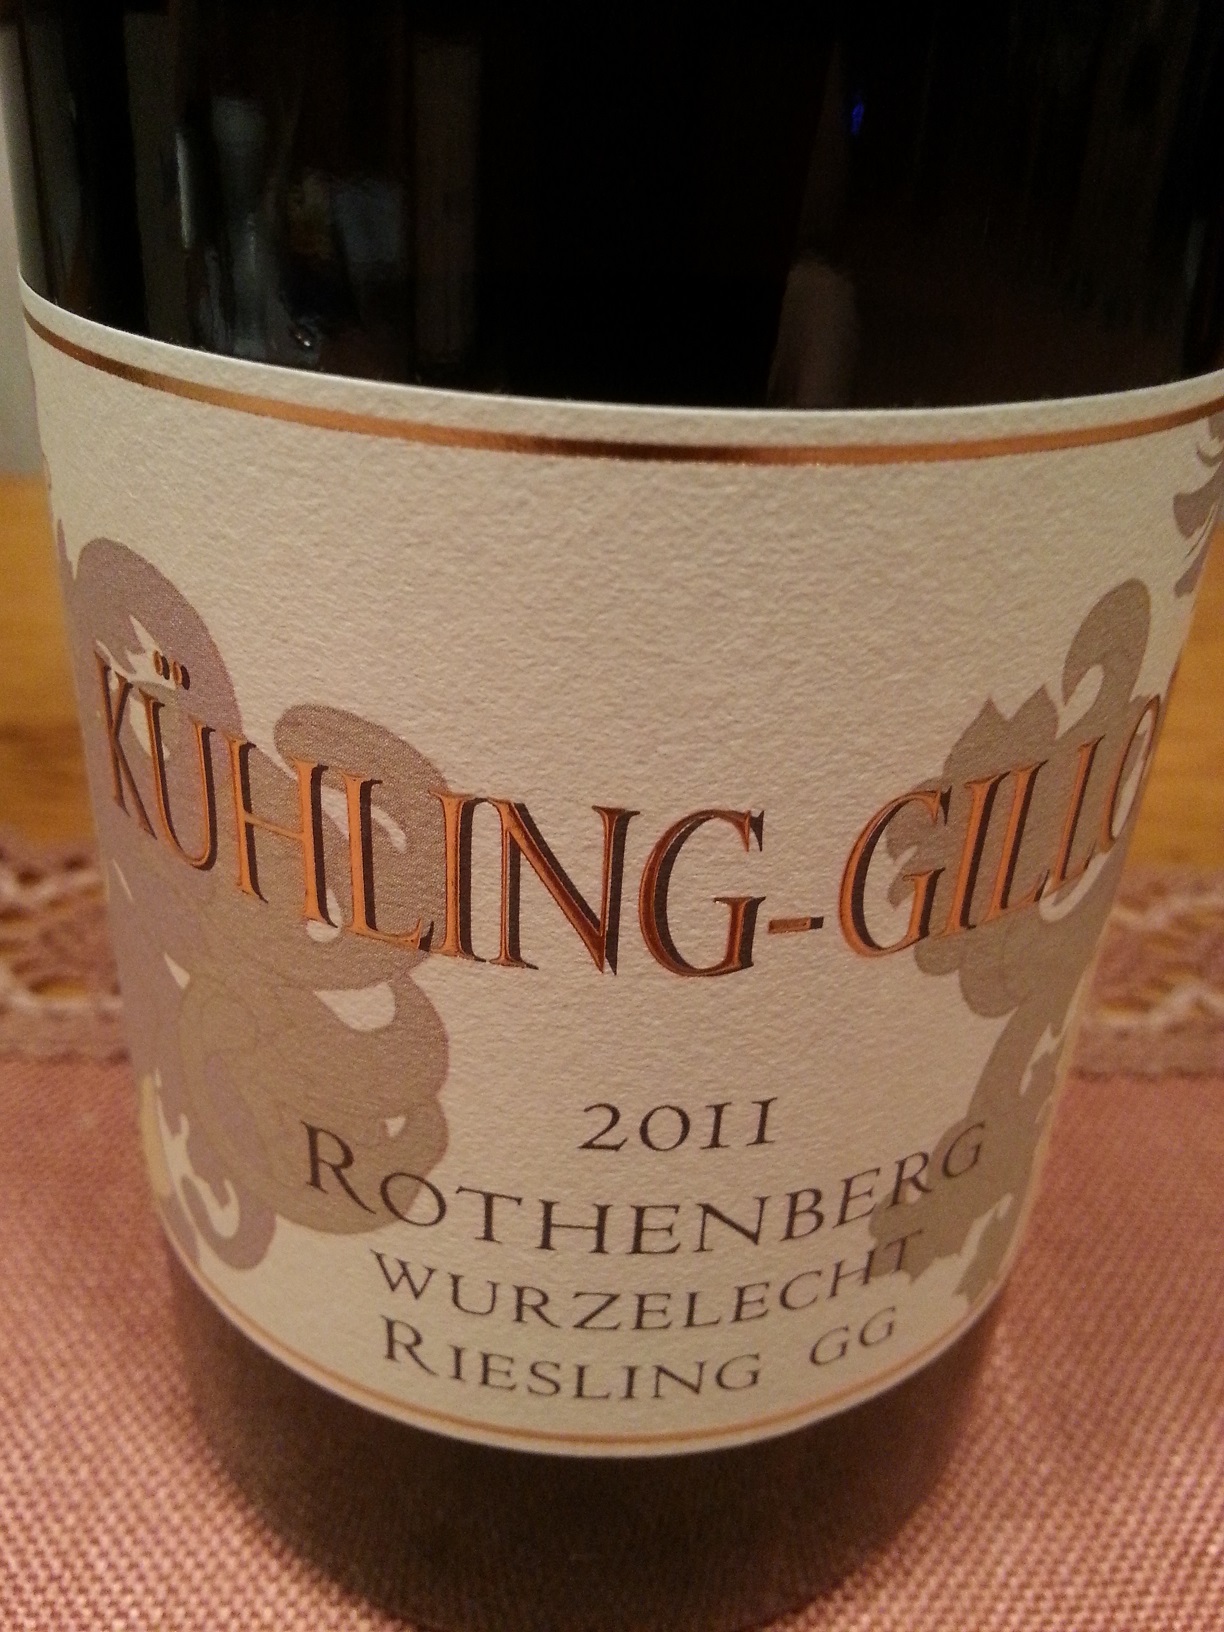 2011 Riesling Rothenberg Wurzelecht GG | Kühling-Gillot